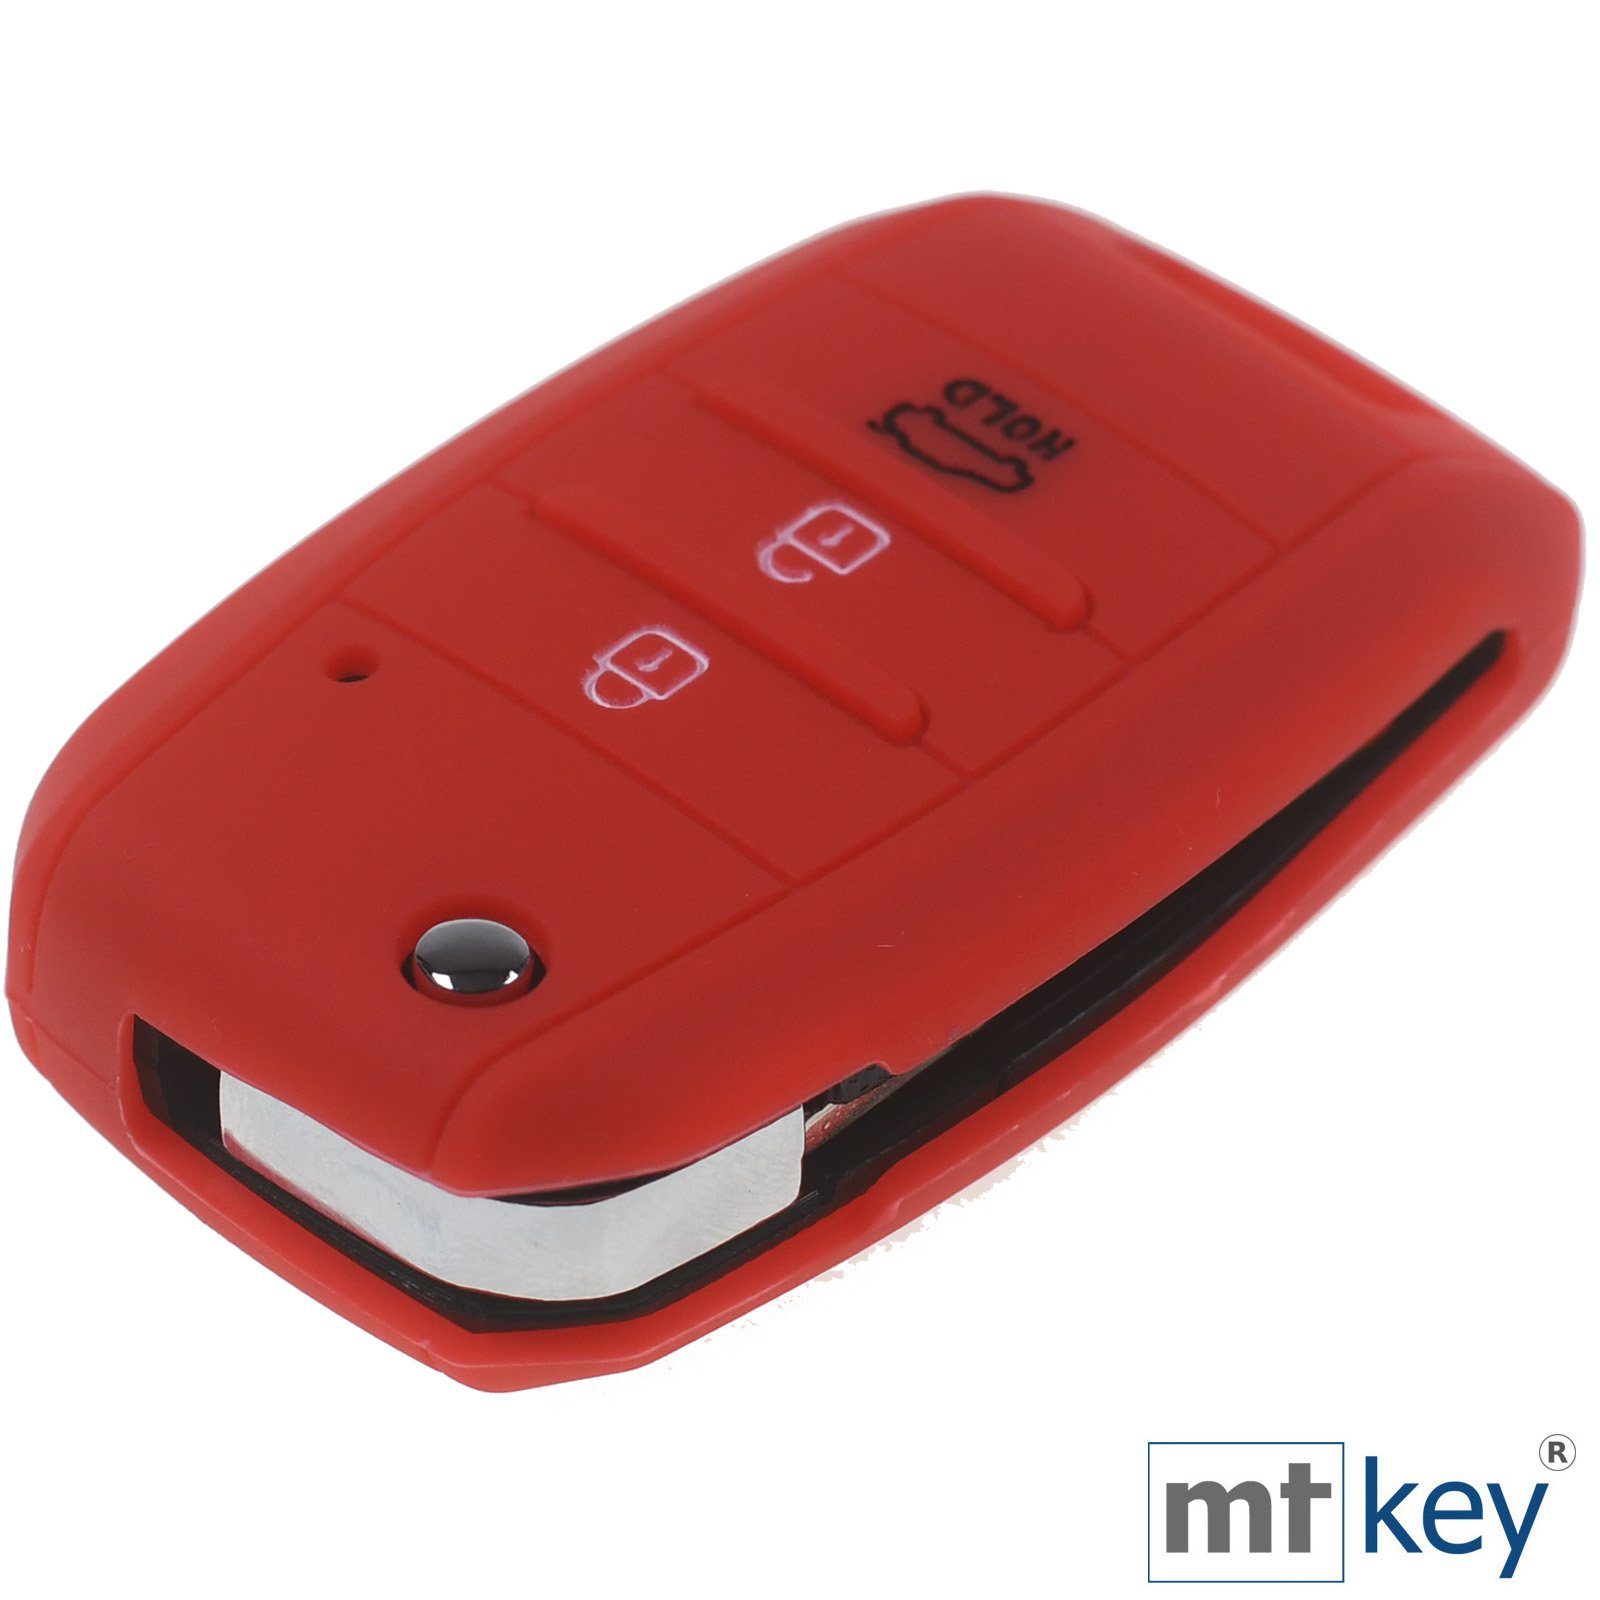 KIA Schlüsseltasche Silikon mt-key Schutzhülle Soul Tasten Softcase 3 für Schlüssel Ceed Stonicens Sportage Rot, Picantio Rio Autoschlüssel